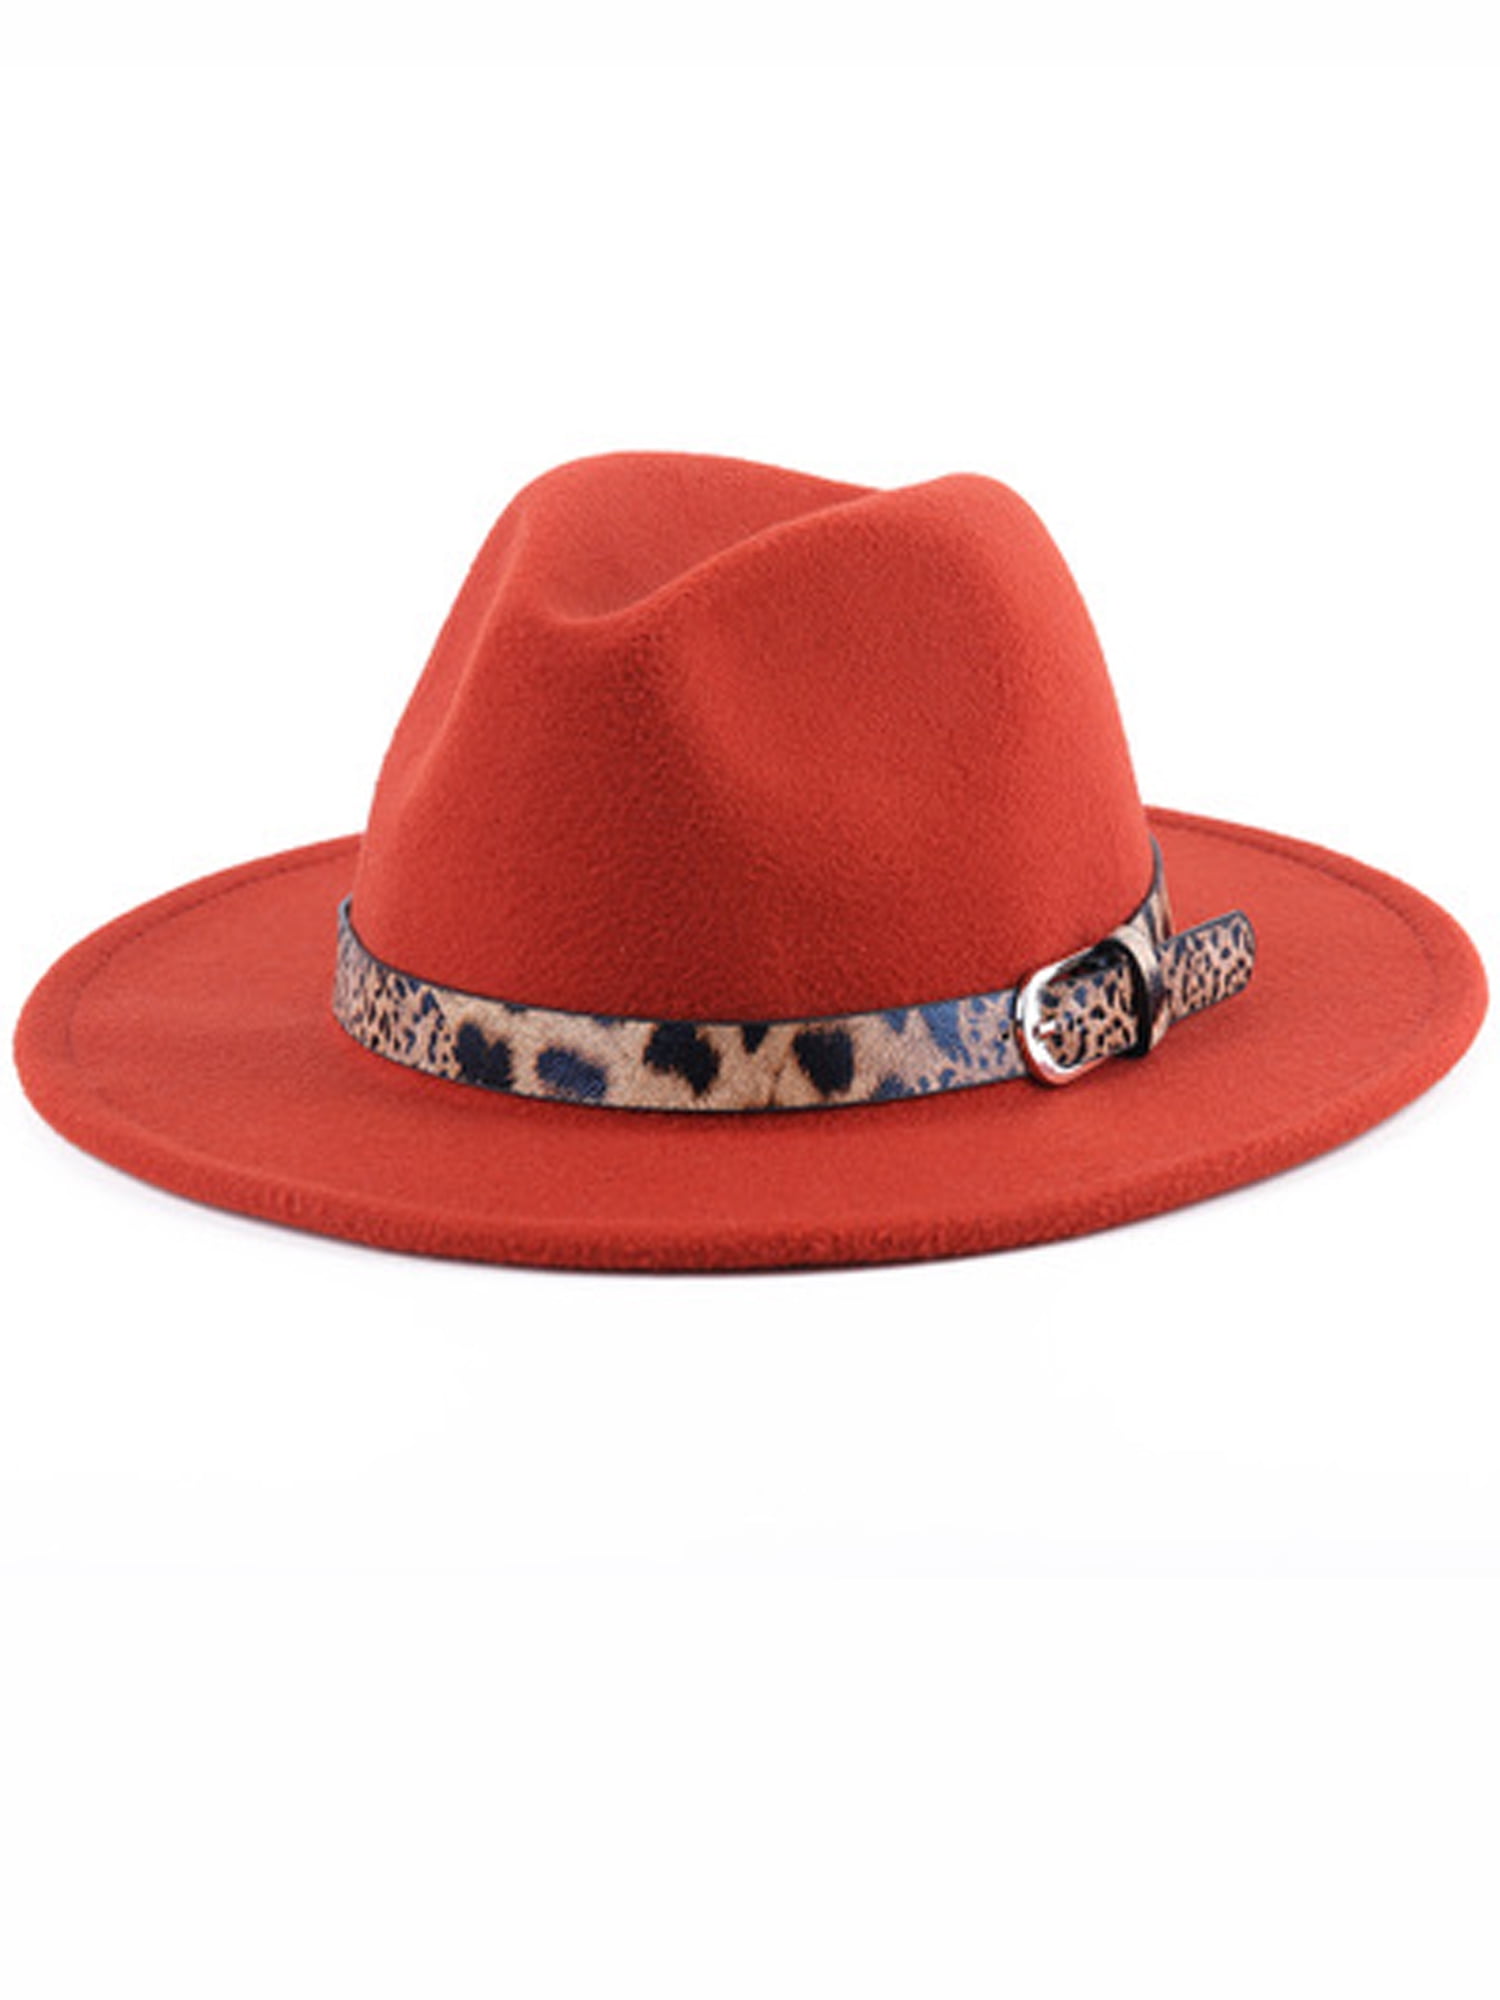 Fedoras Real Wool Felt Hat for Women Men Classical Jazz Cap with Tassels Band Vintage Wide Brim Jazz Hat Black